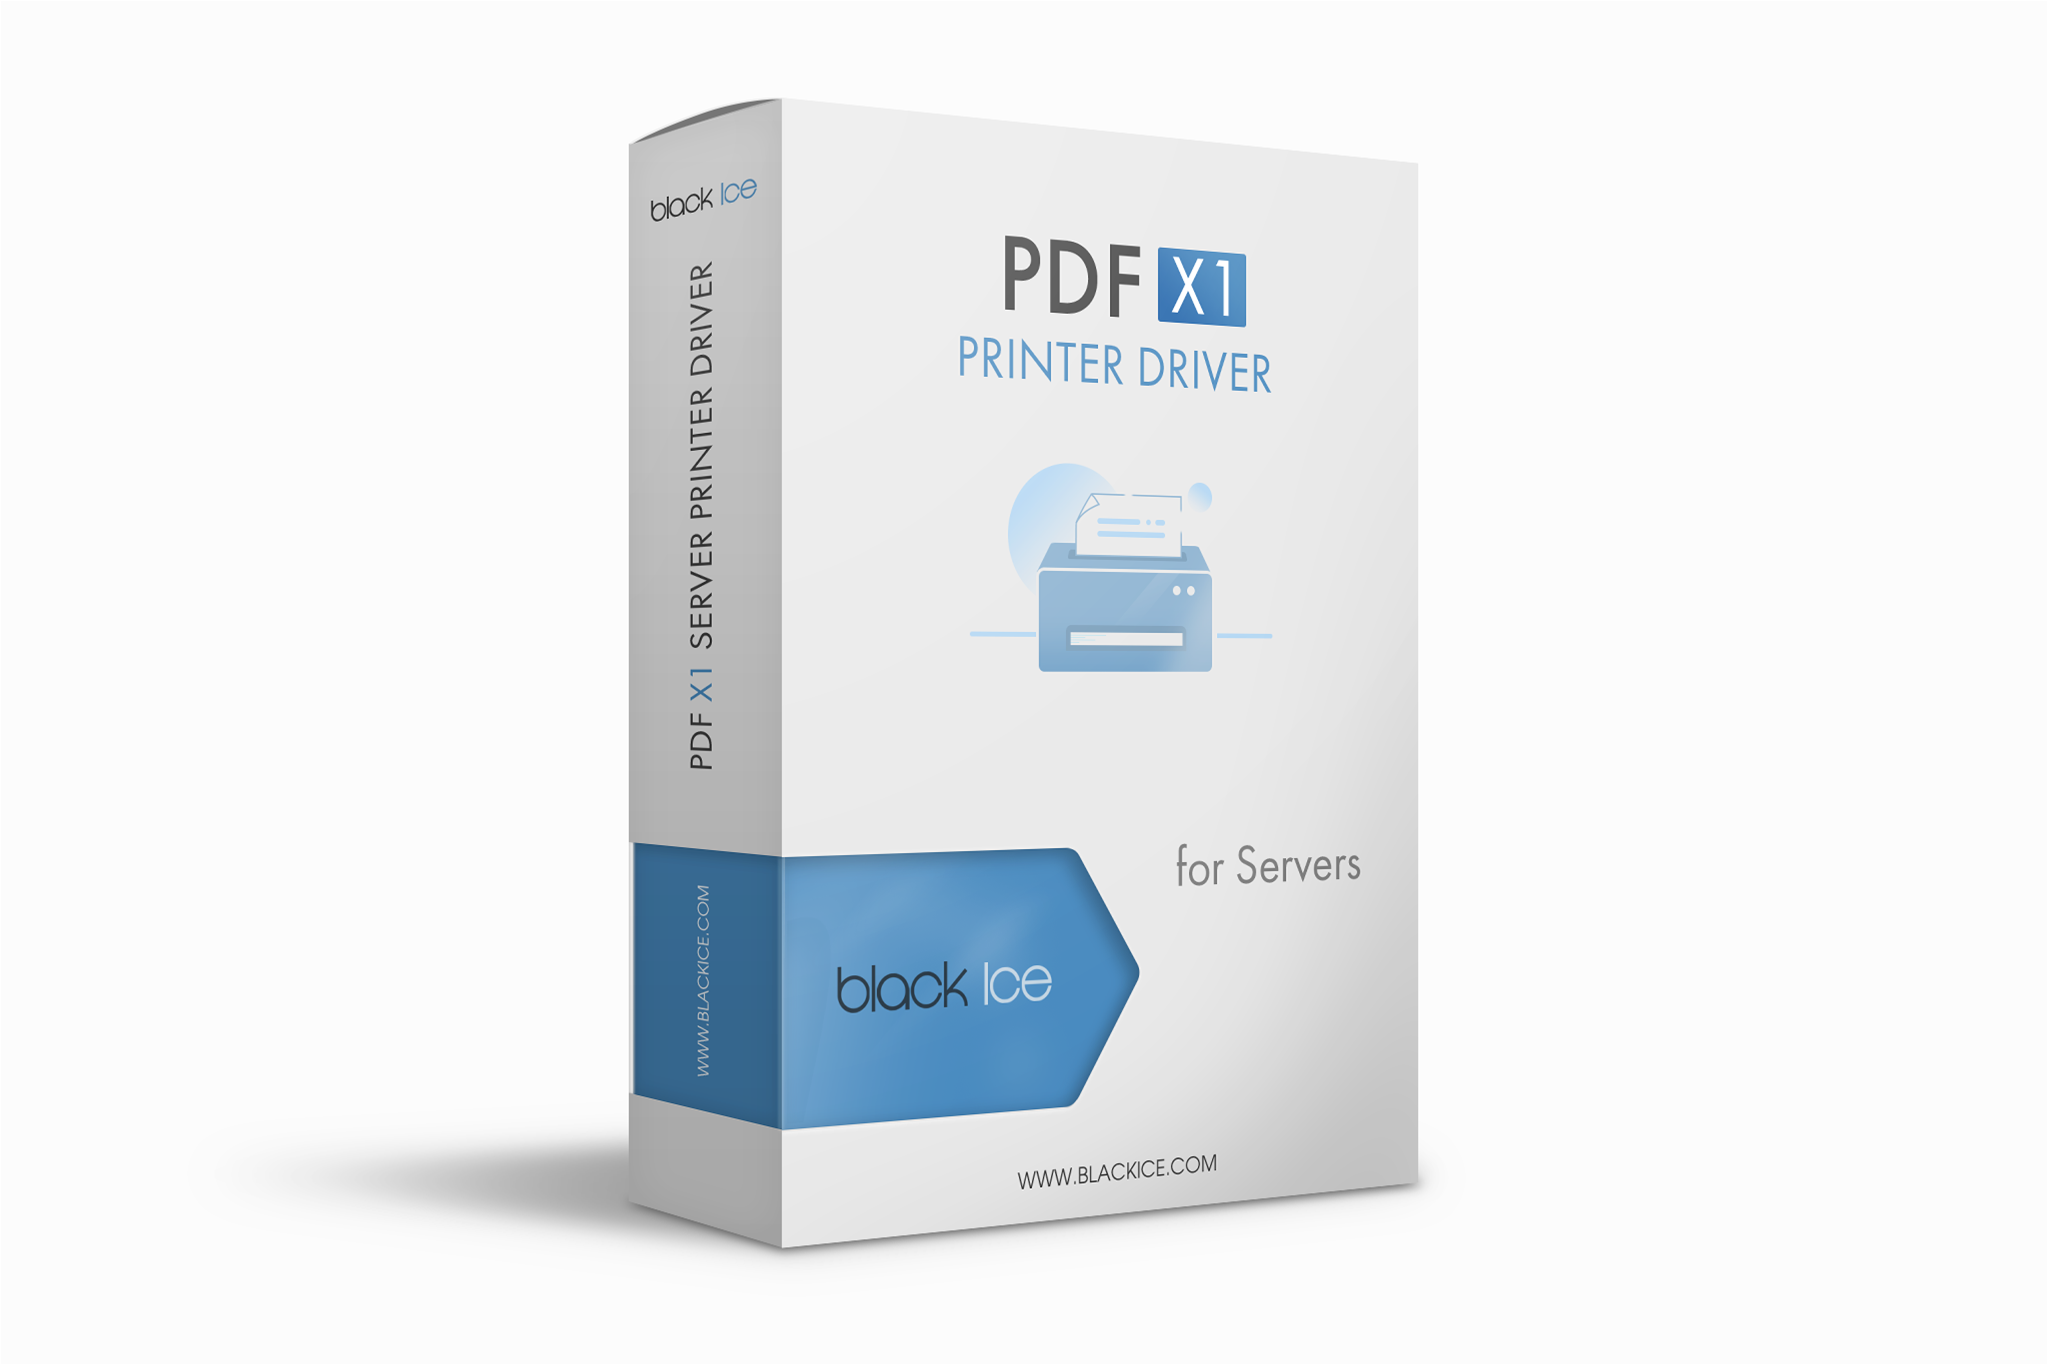 PDF X1 Printer Driver Server Subscription (Single Server)